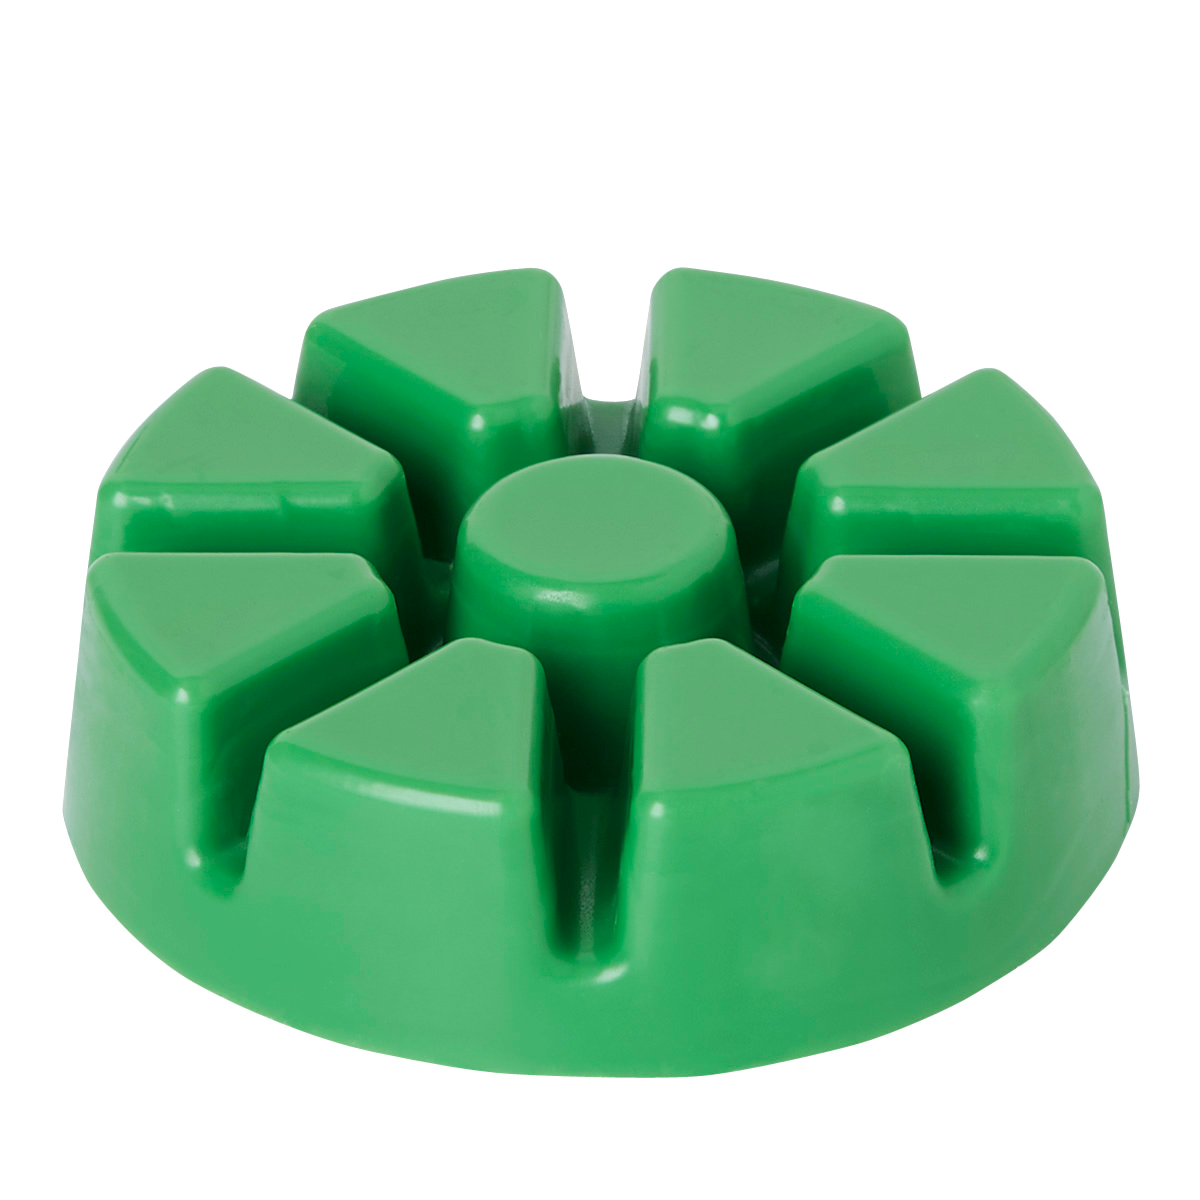 Evergreen Fir ™ Scent Plus® Wax Melts - PartyLite US